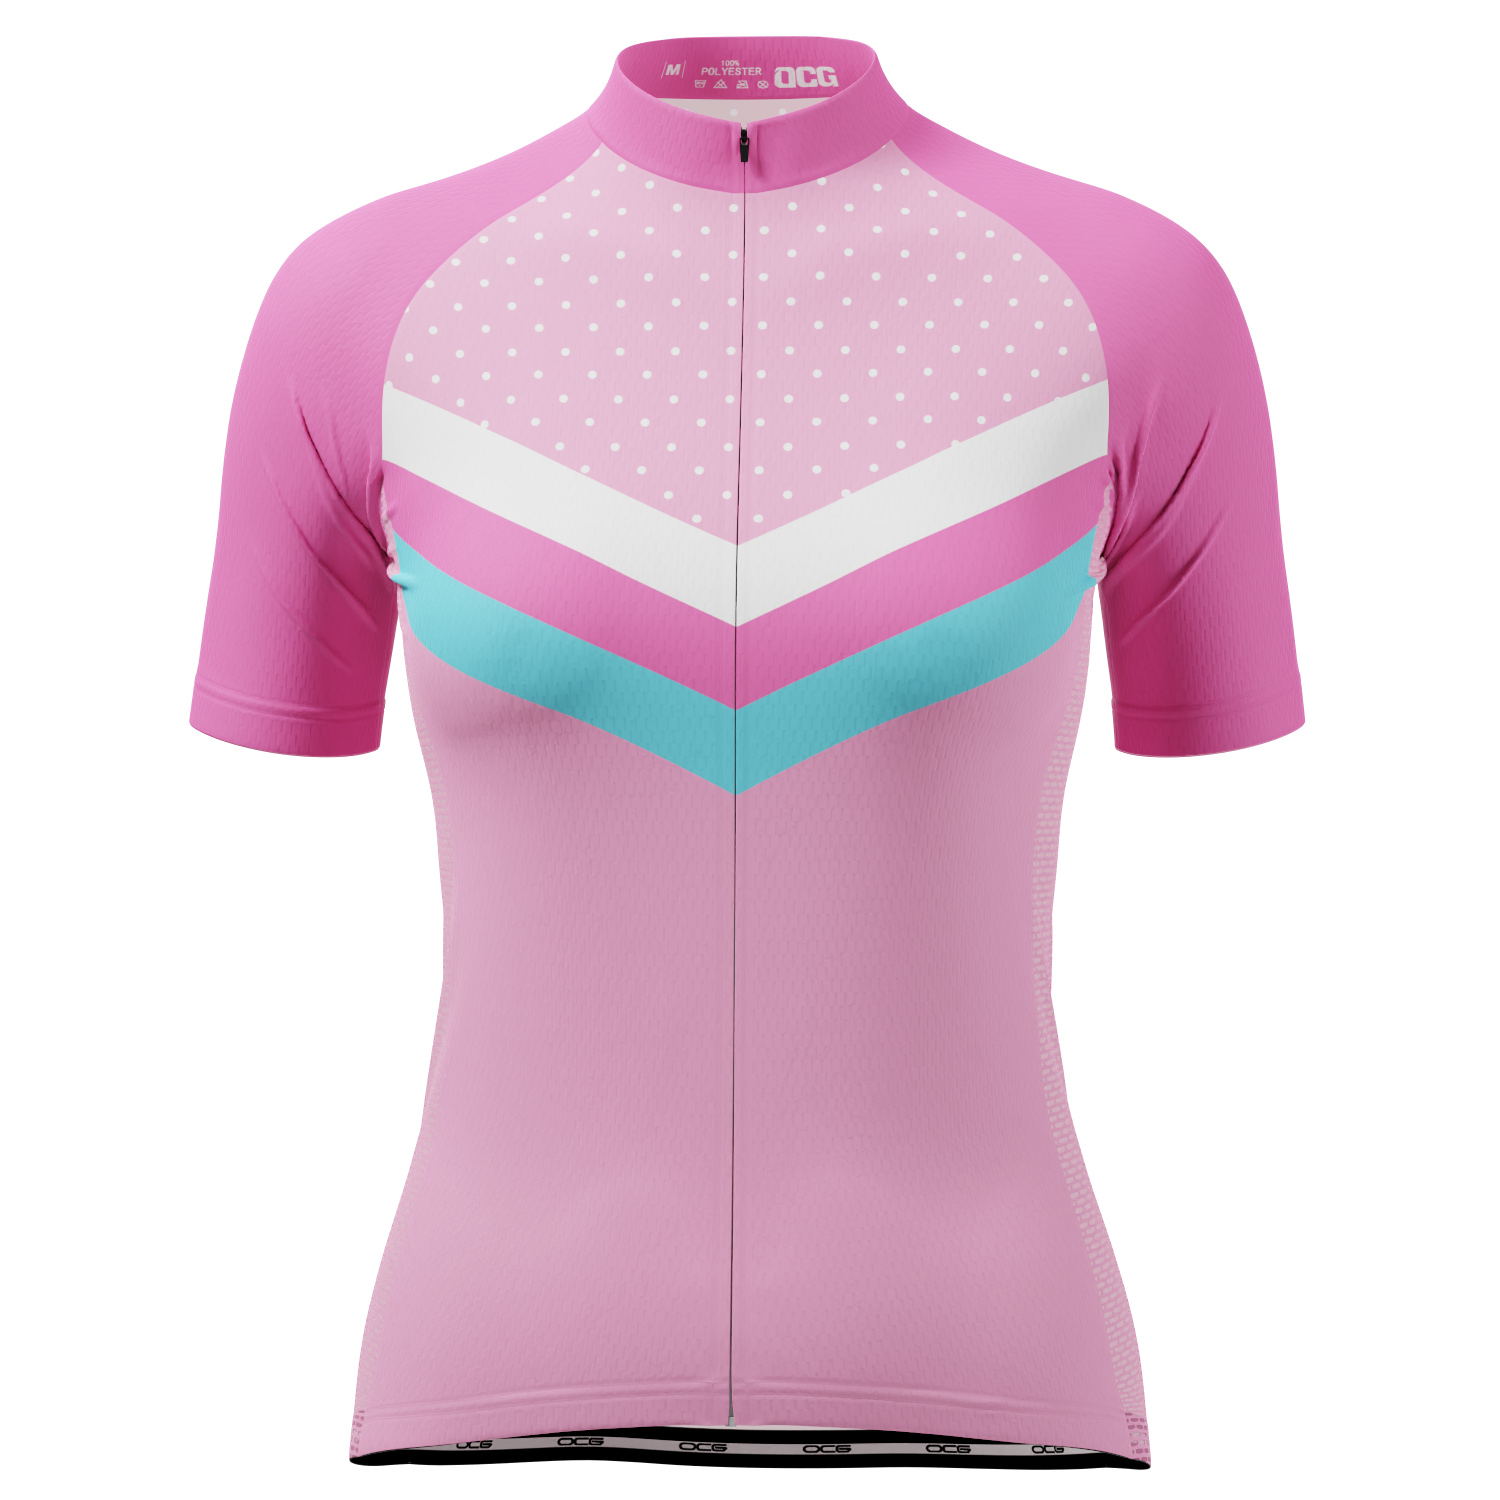 Women's V-Series Pro Short Sleeve Cycling Jersey